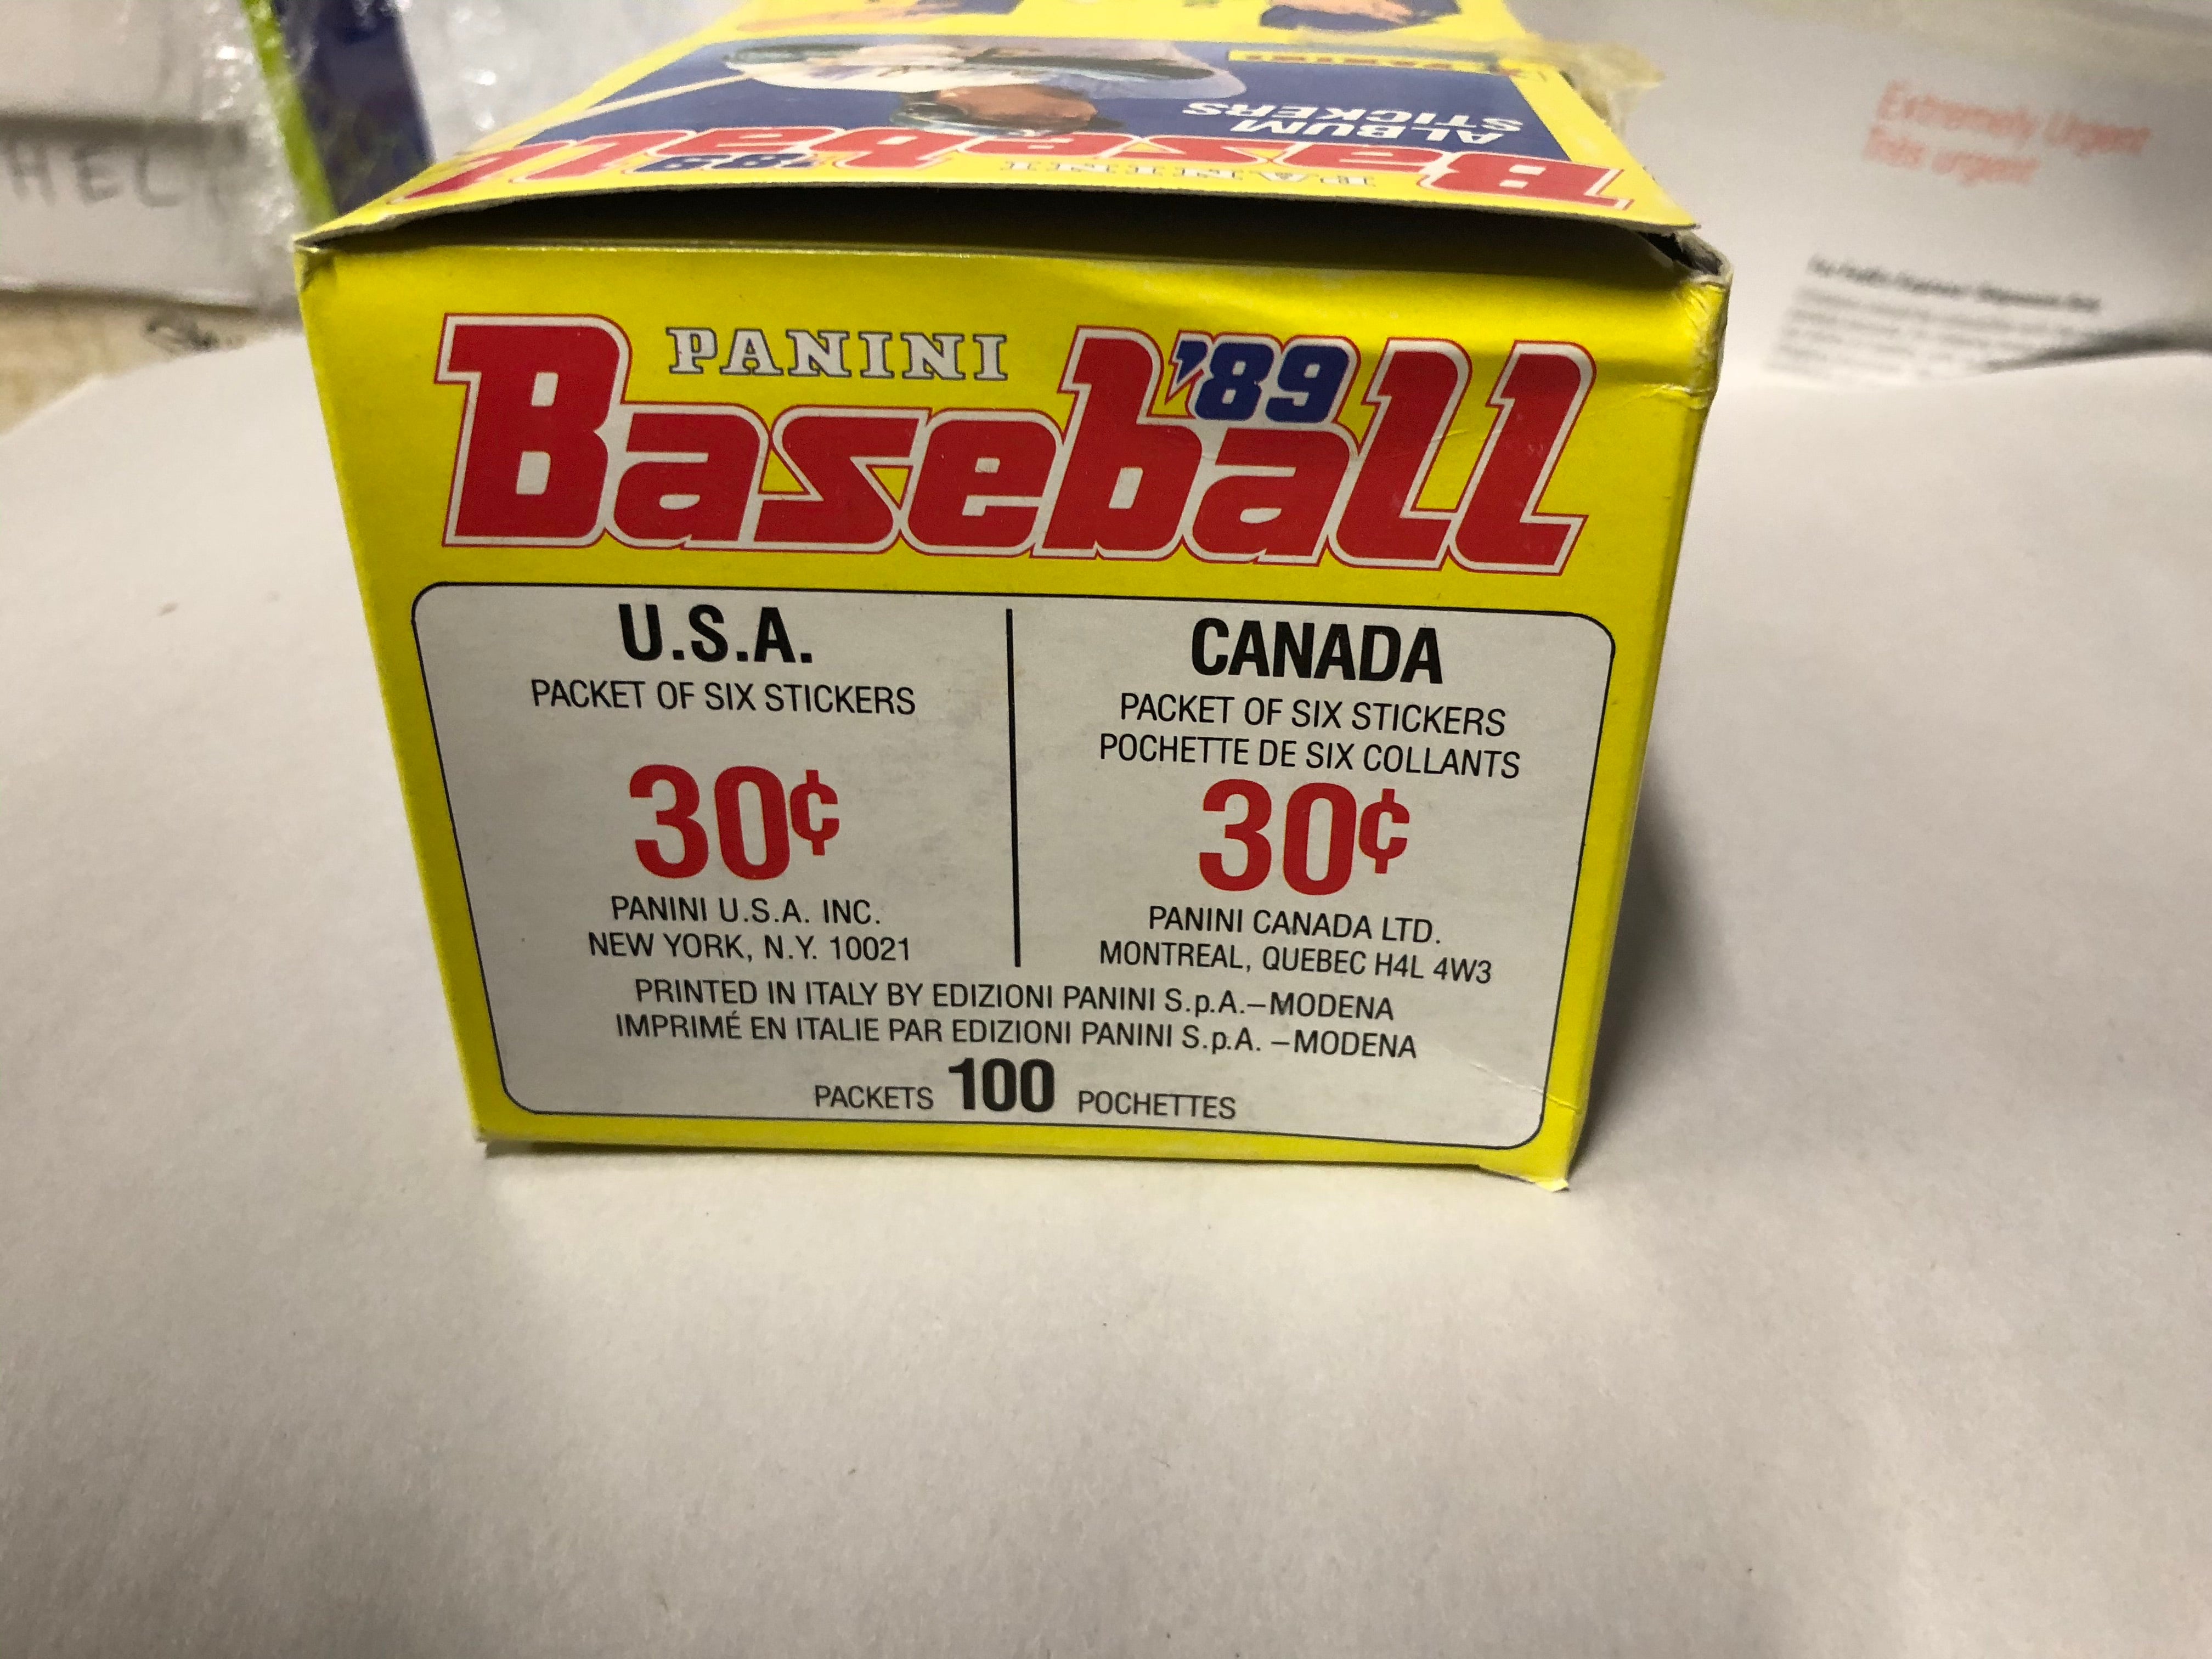 Baseball Panini rare full factory sealed 100 packs box from 1989